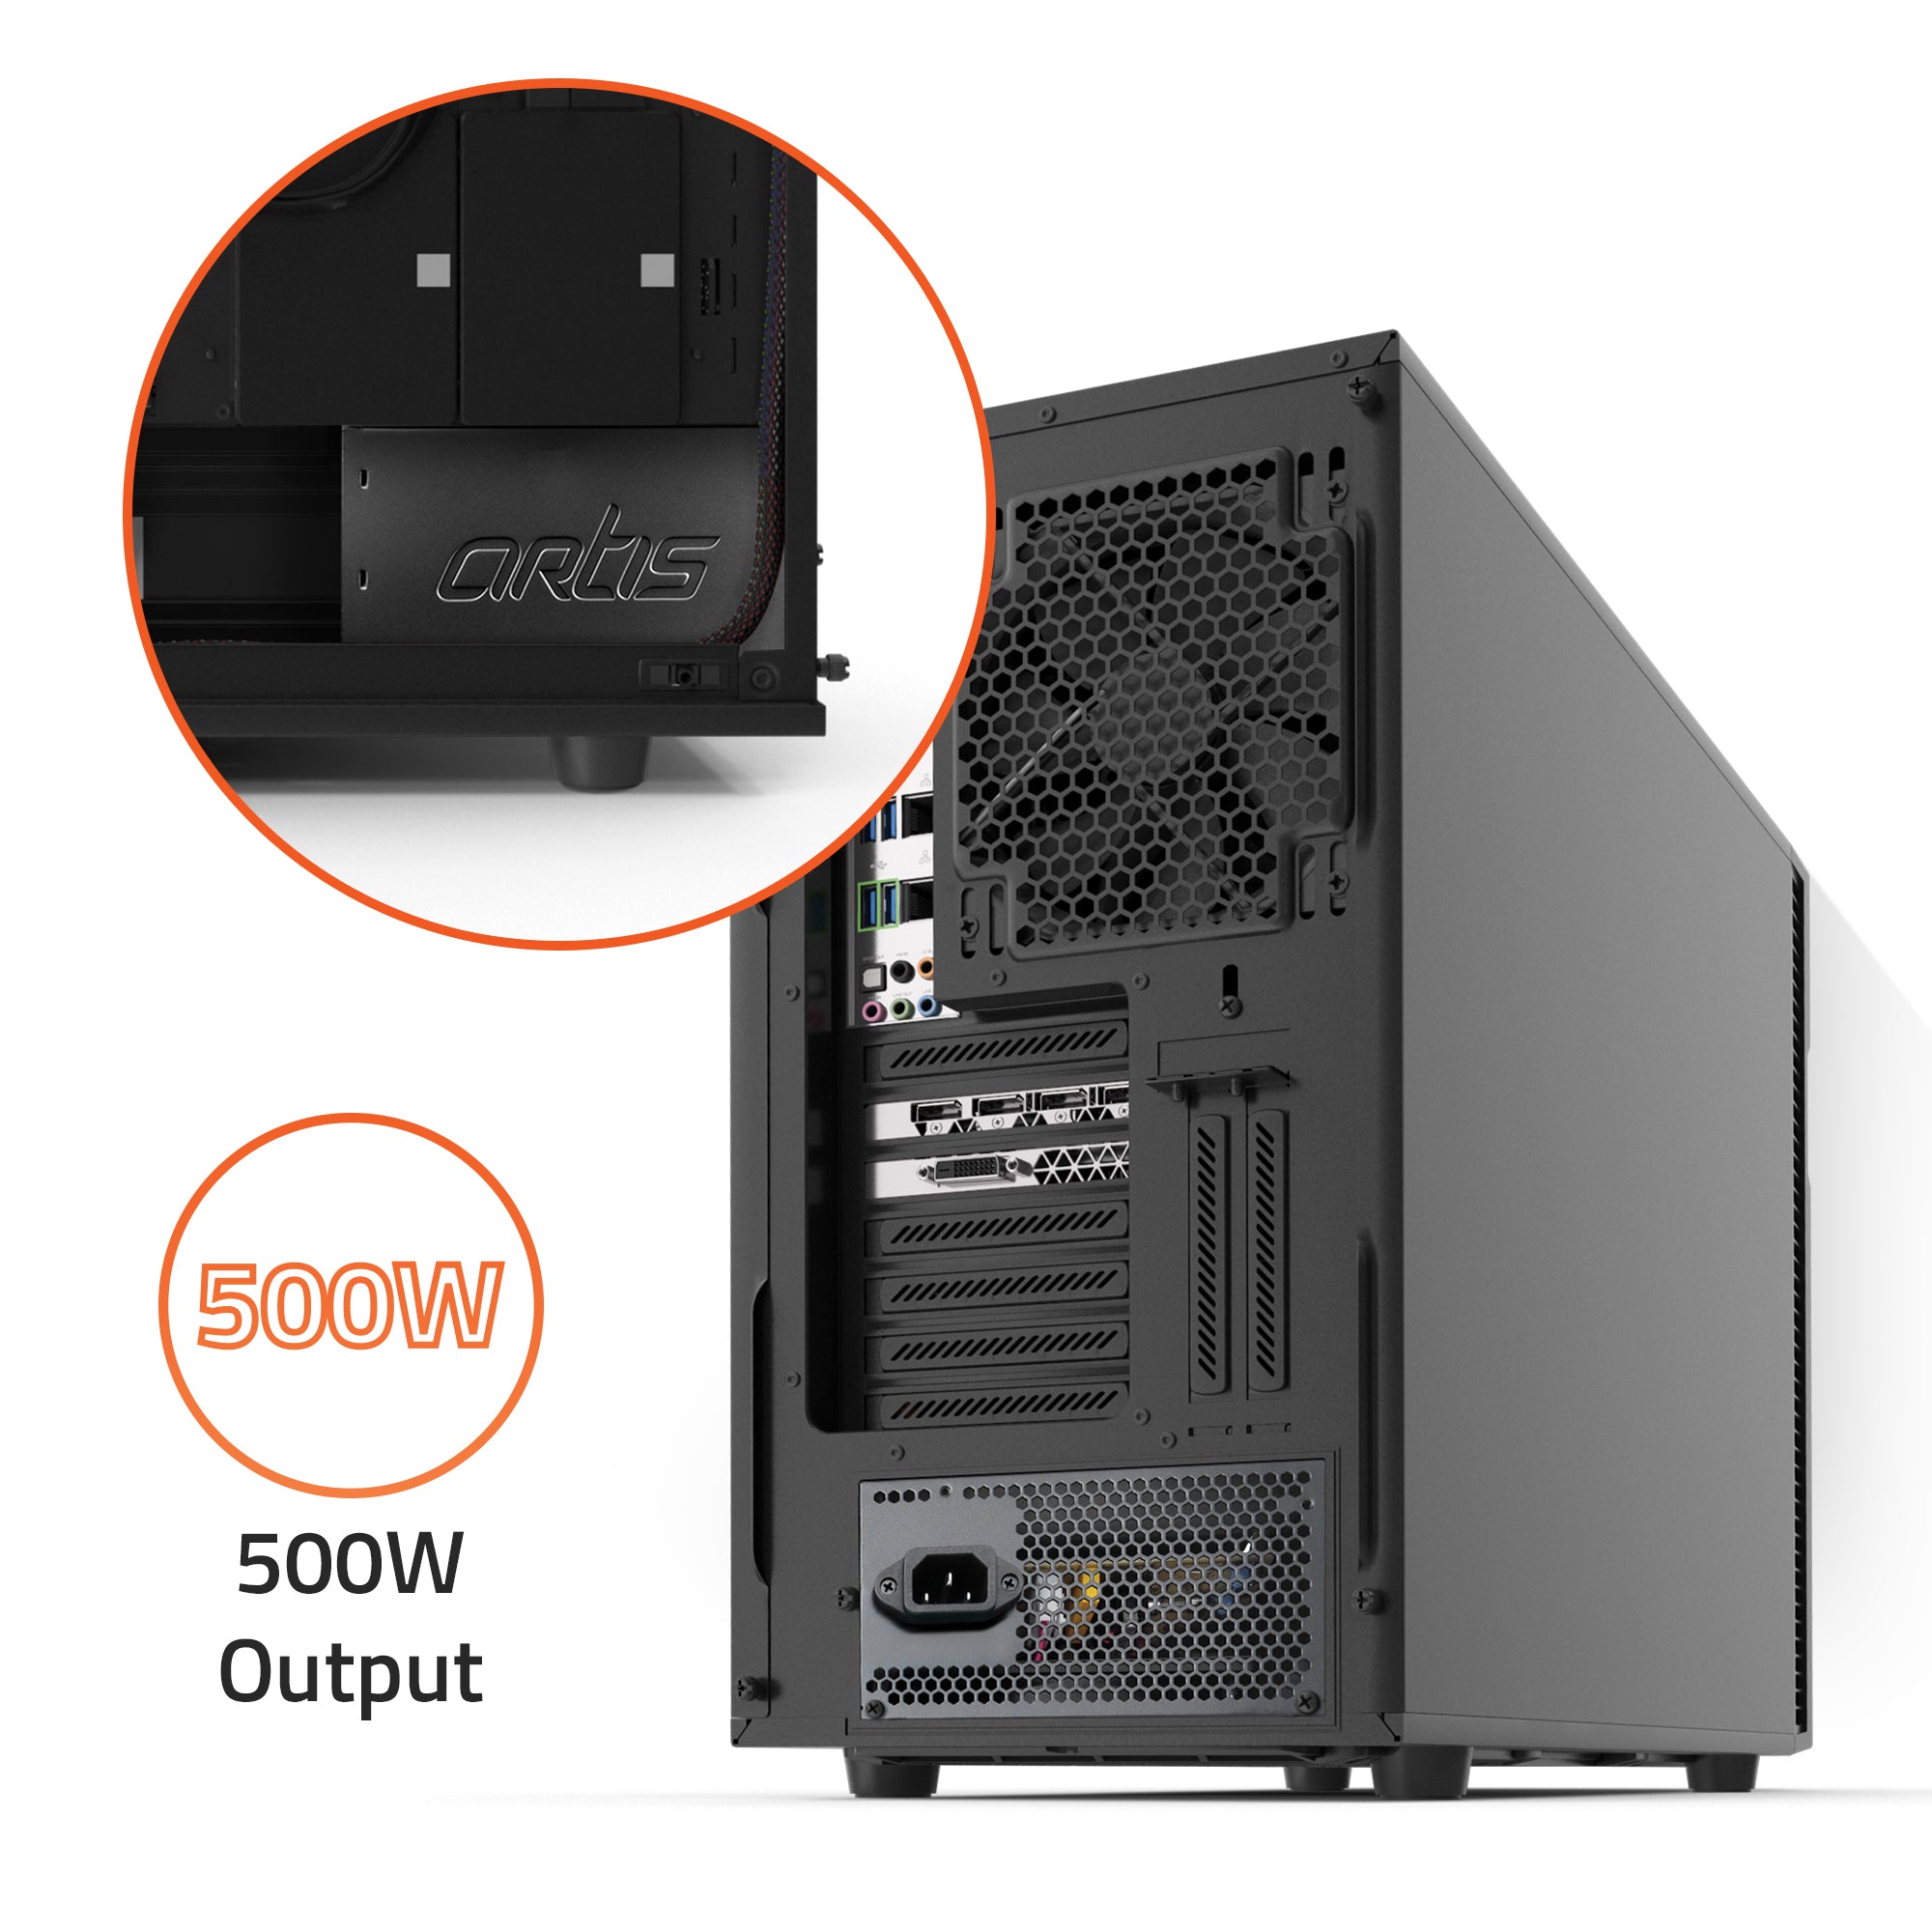 500 Watt PSU SMPS | 500 Watt Super Silent Power Supply Unit